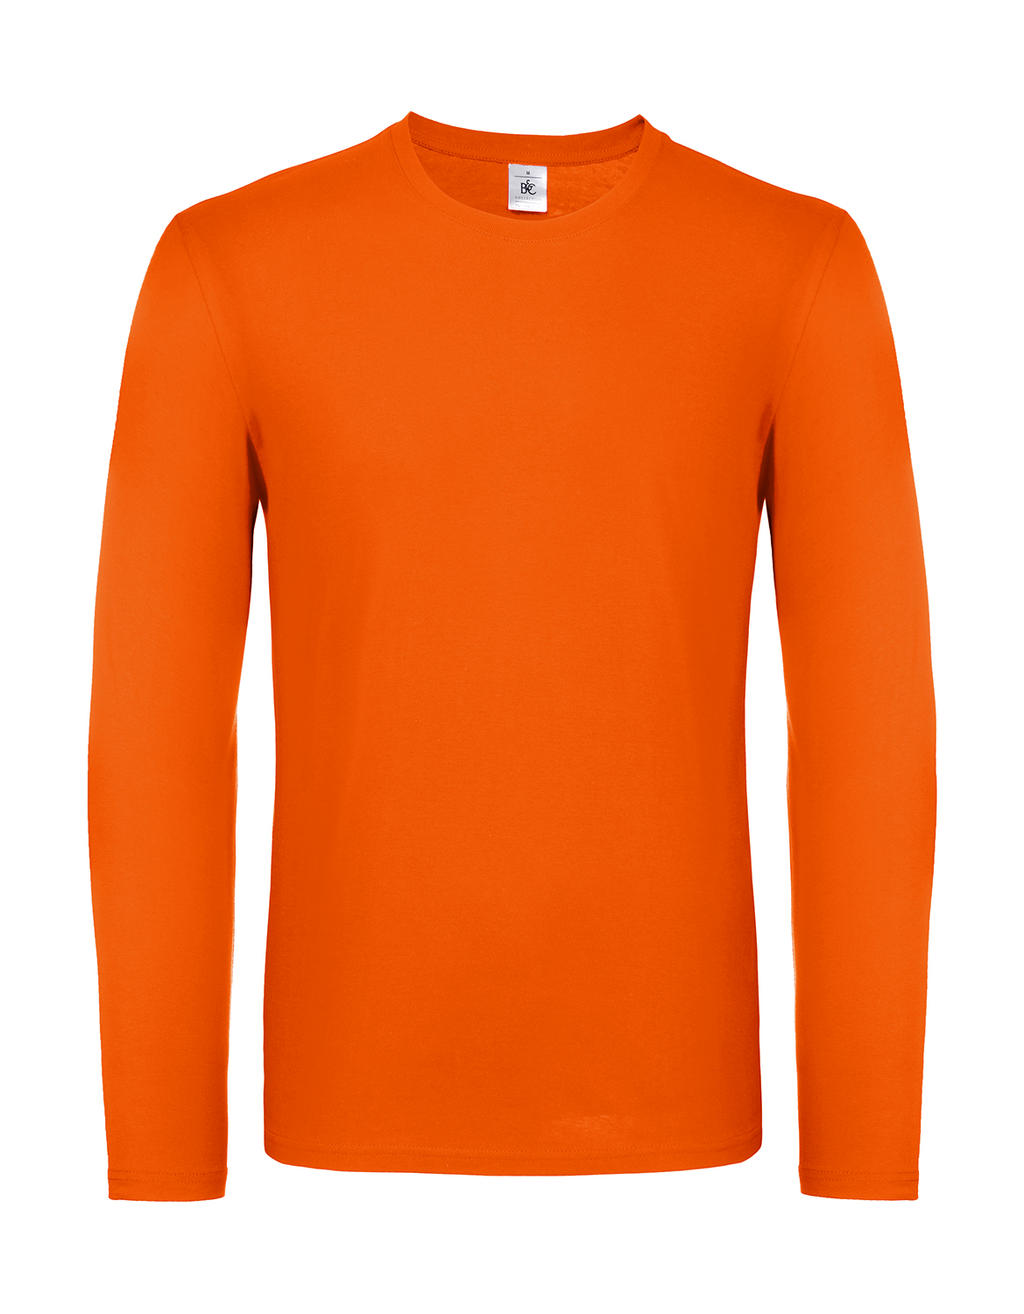 Tričko s dlhými rukávmi #E150 - orange